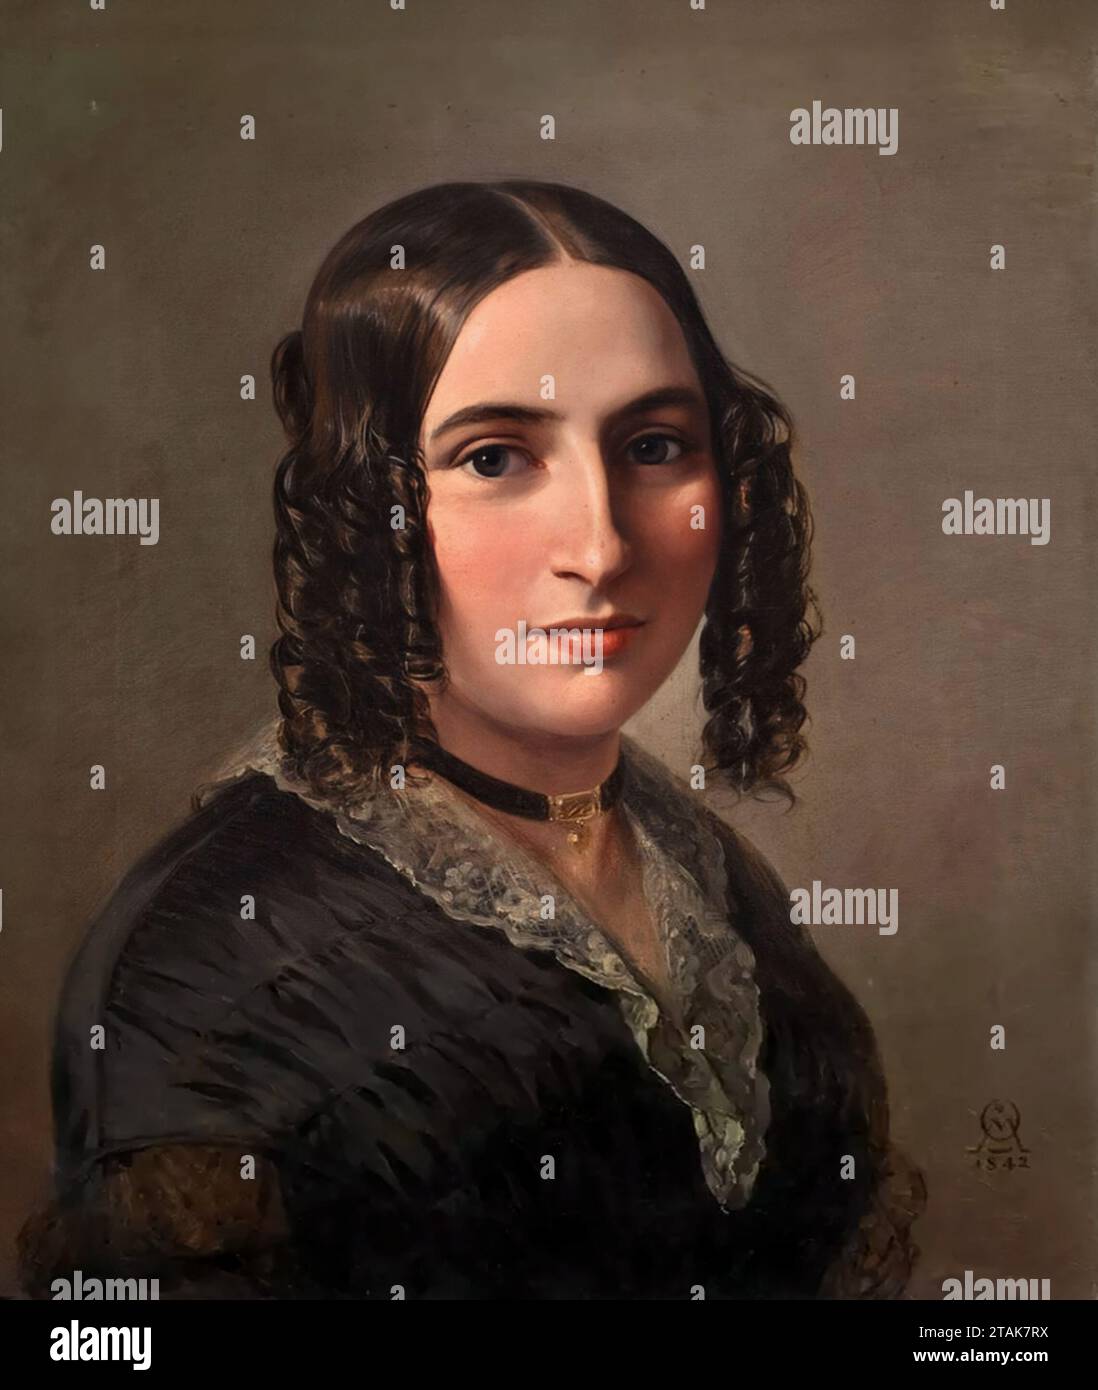 Fanny Mendelssohn Hensel. Porträt des deutschen Komponisten und Pianisten Fanny Mendelssohn (1805-1847) von Moritz Daniel Oppenheim, Öl auf Leinwand, 1842 Stockfoto